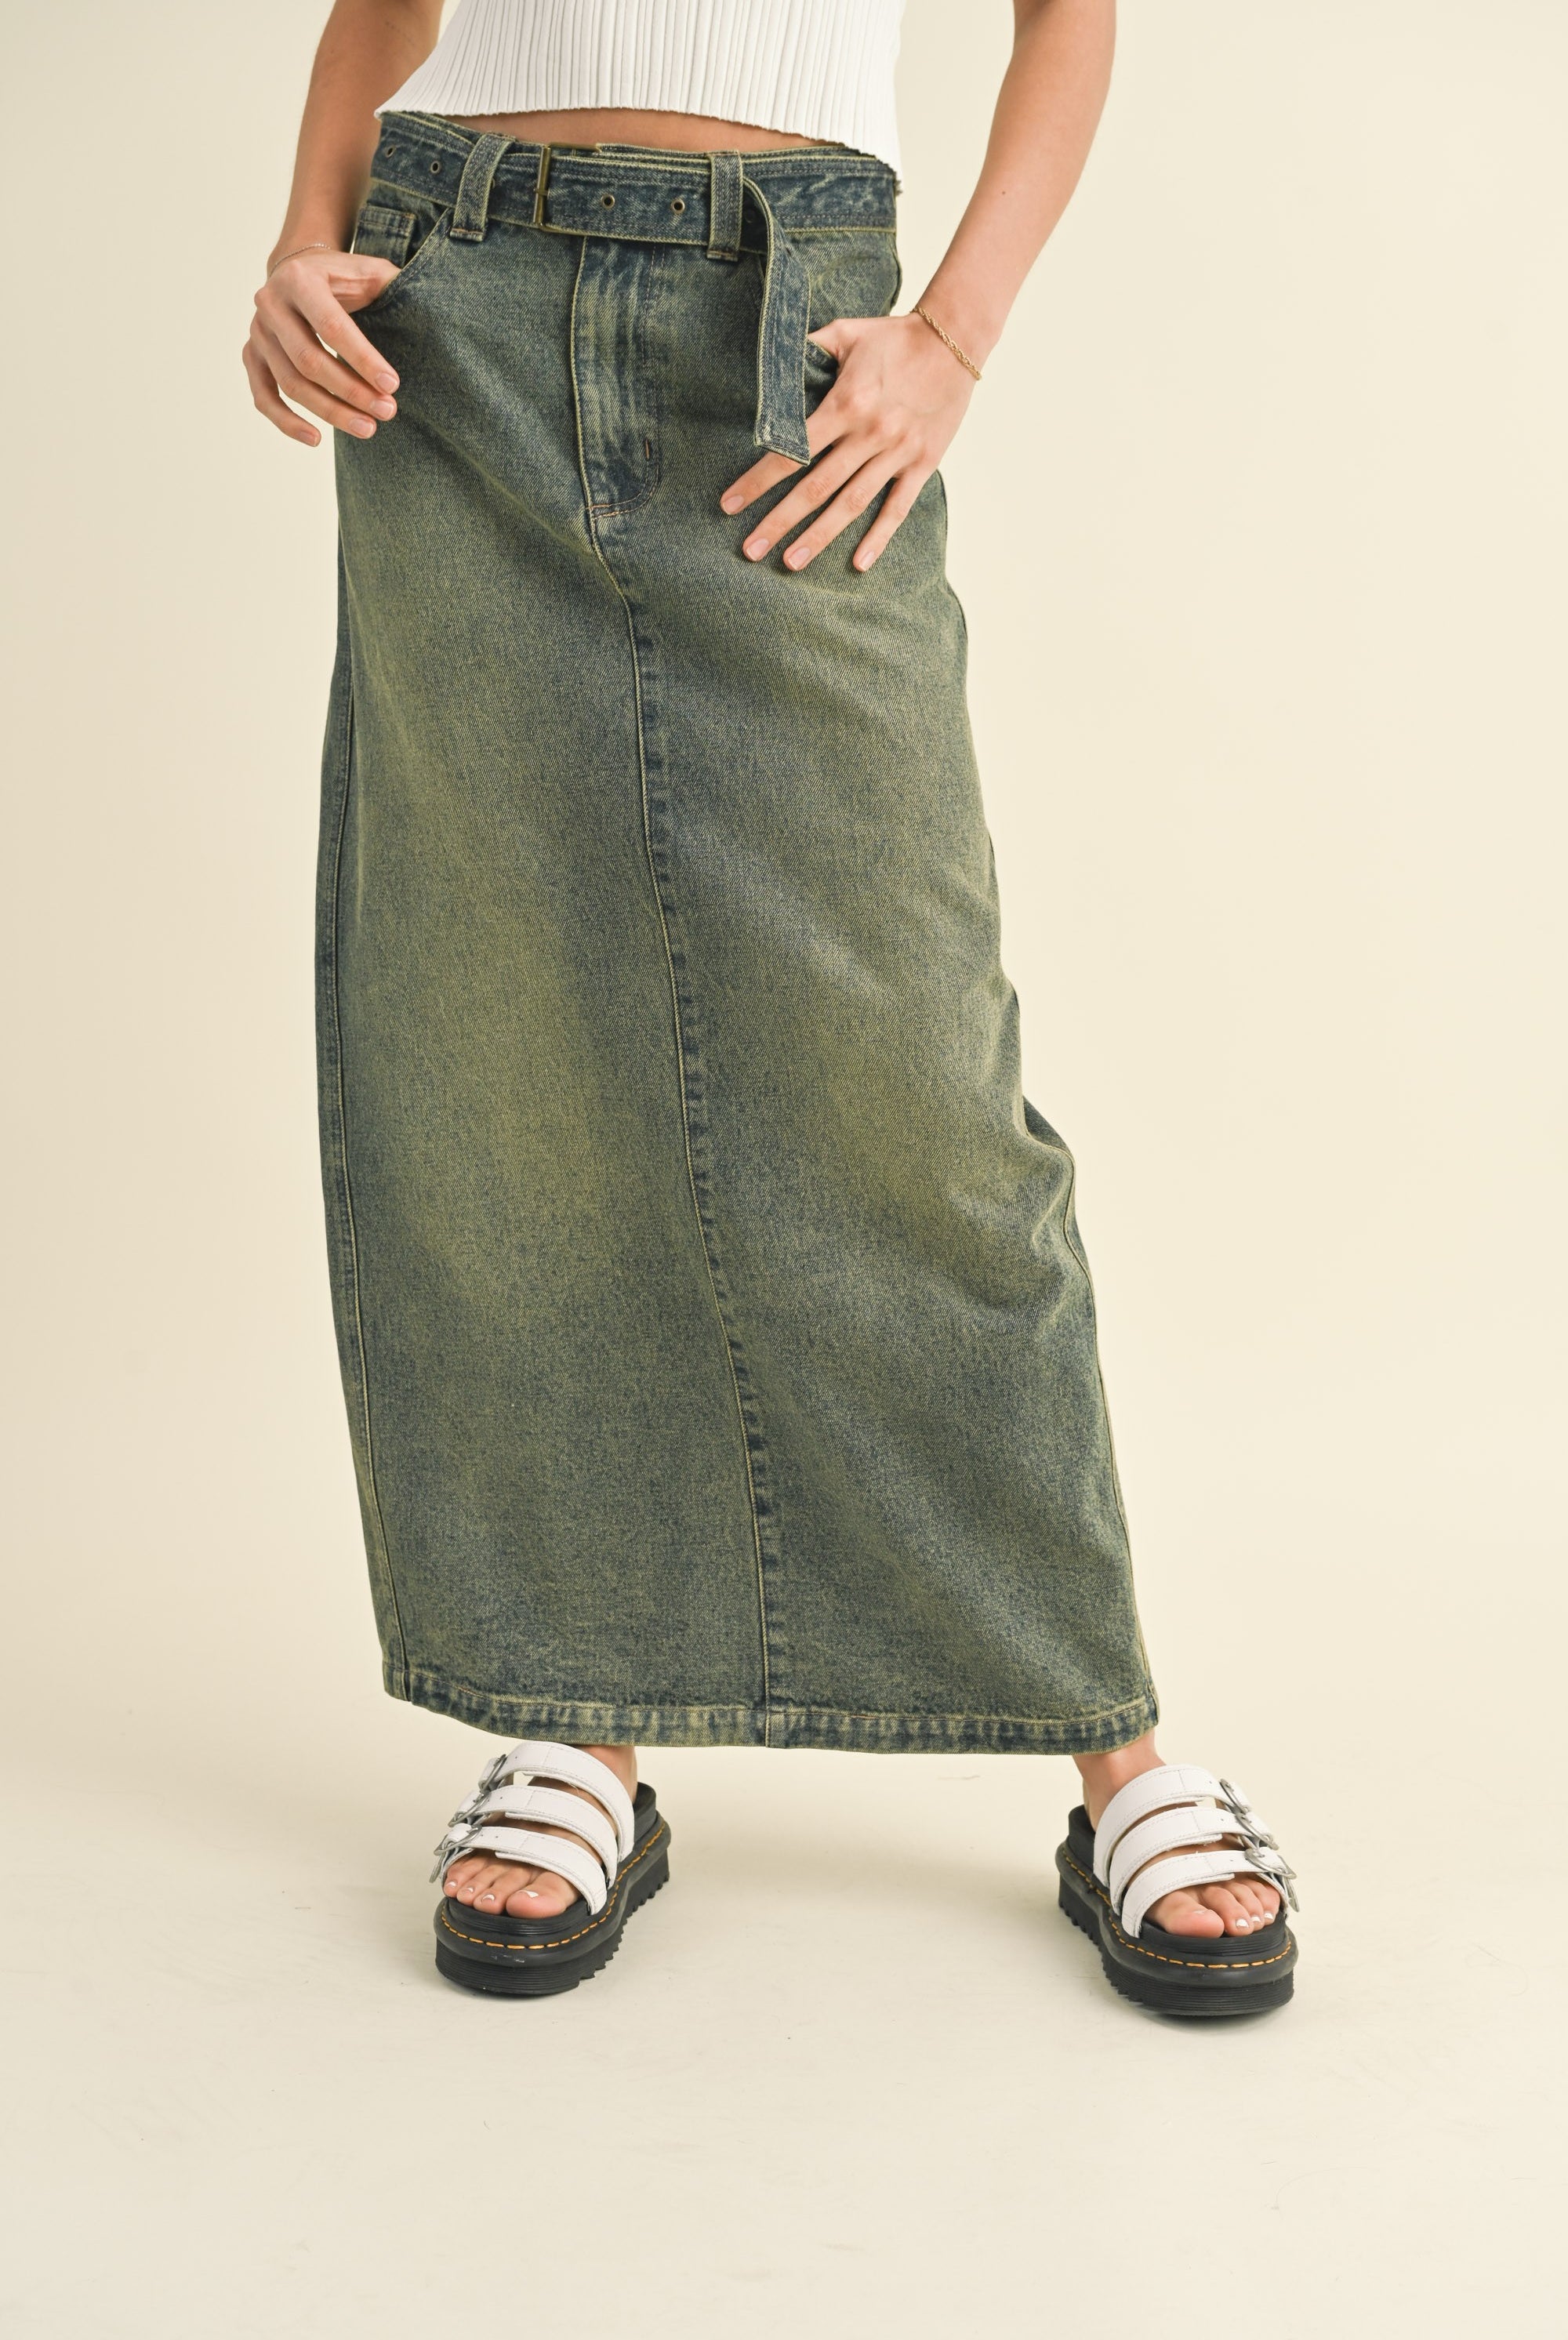 Romalee Long Denim Skirt-Skirt-UrbanCulture-Boutique, A North Port, Florida Women's Fashion Boutique